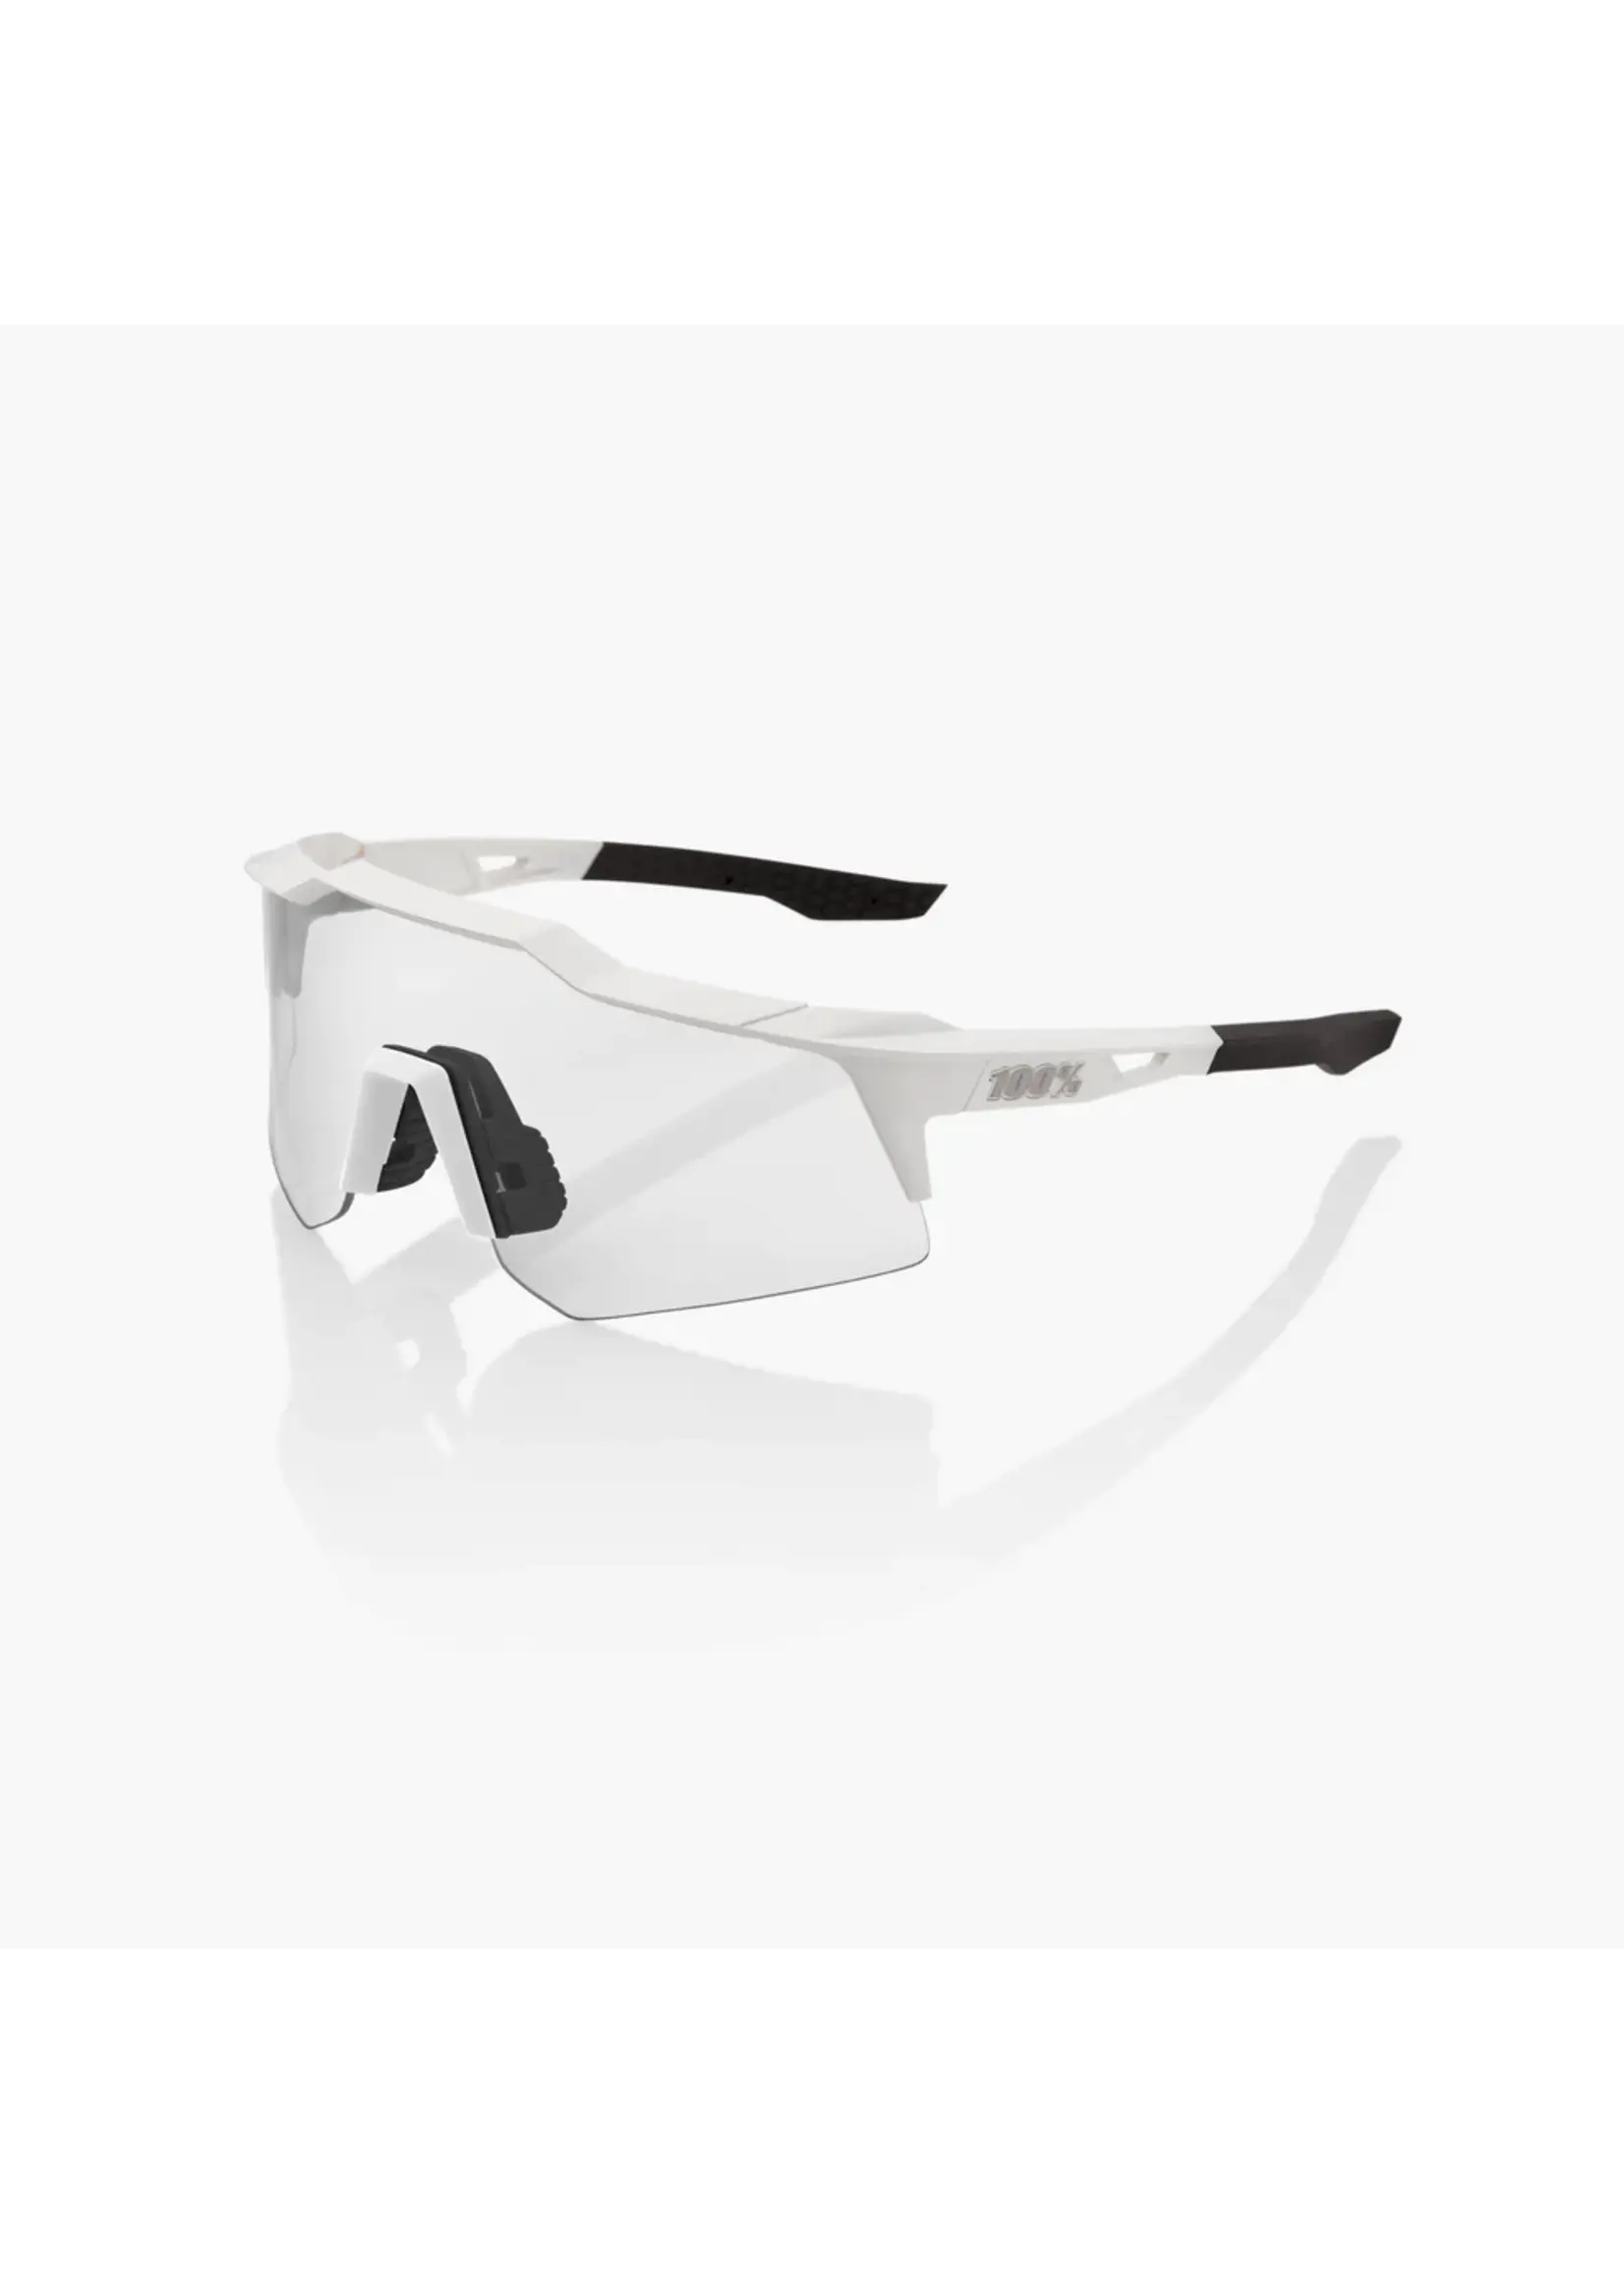 100 Percent 100% Speedcraft XS Sunglasses - Matte White - HiPER Silver Mirror Lens